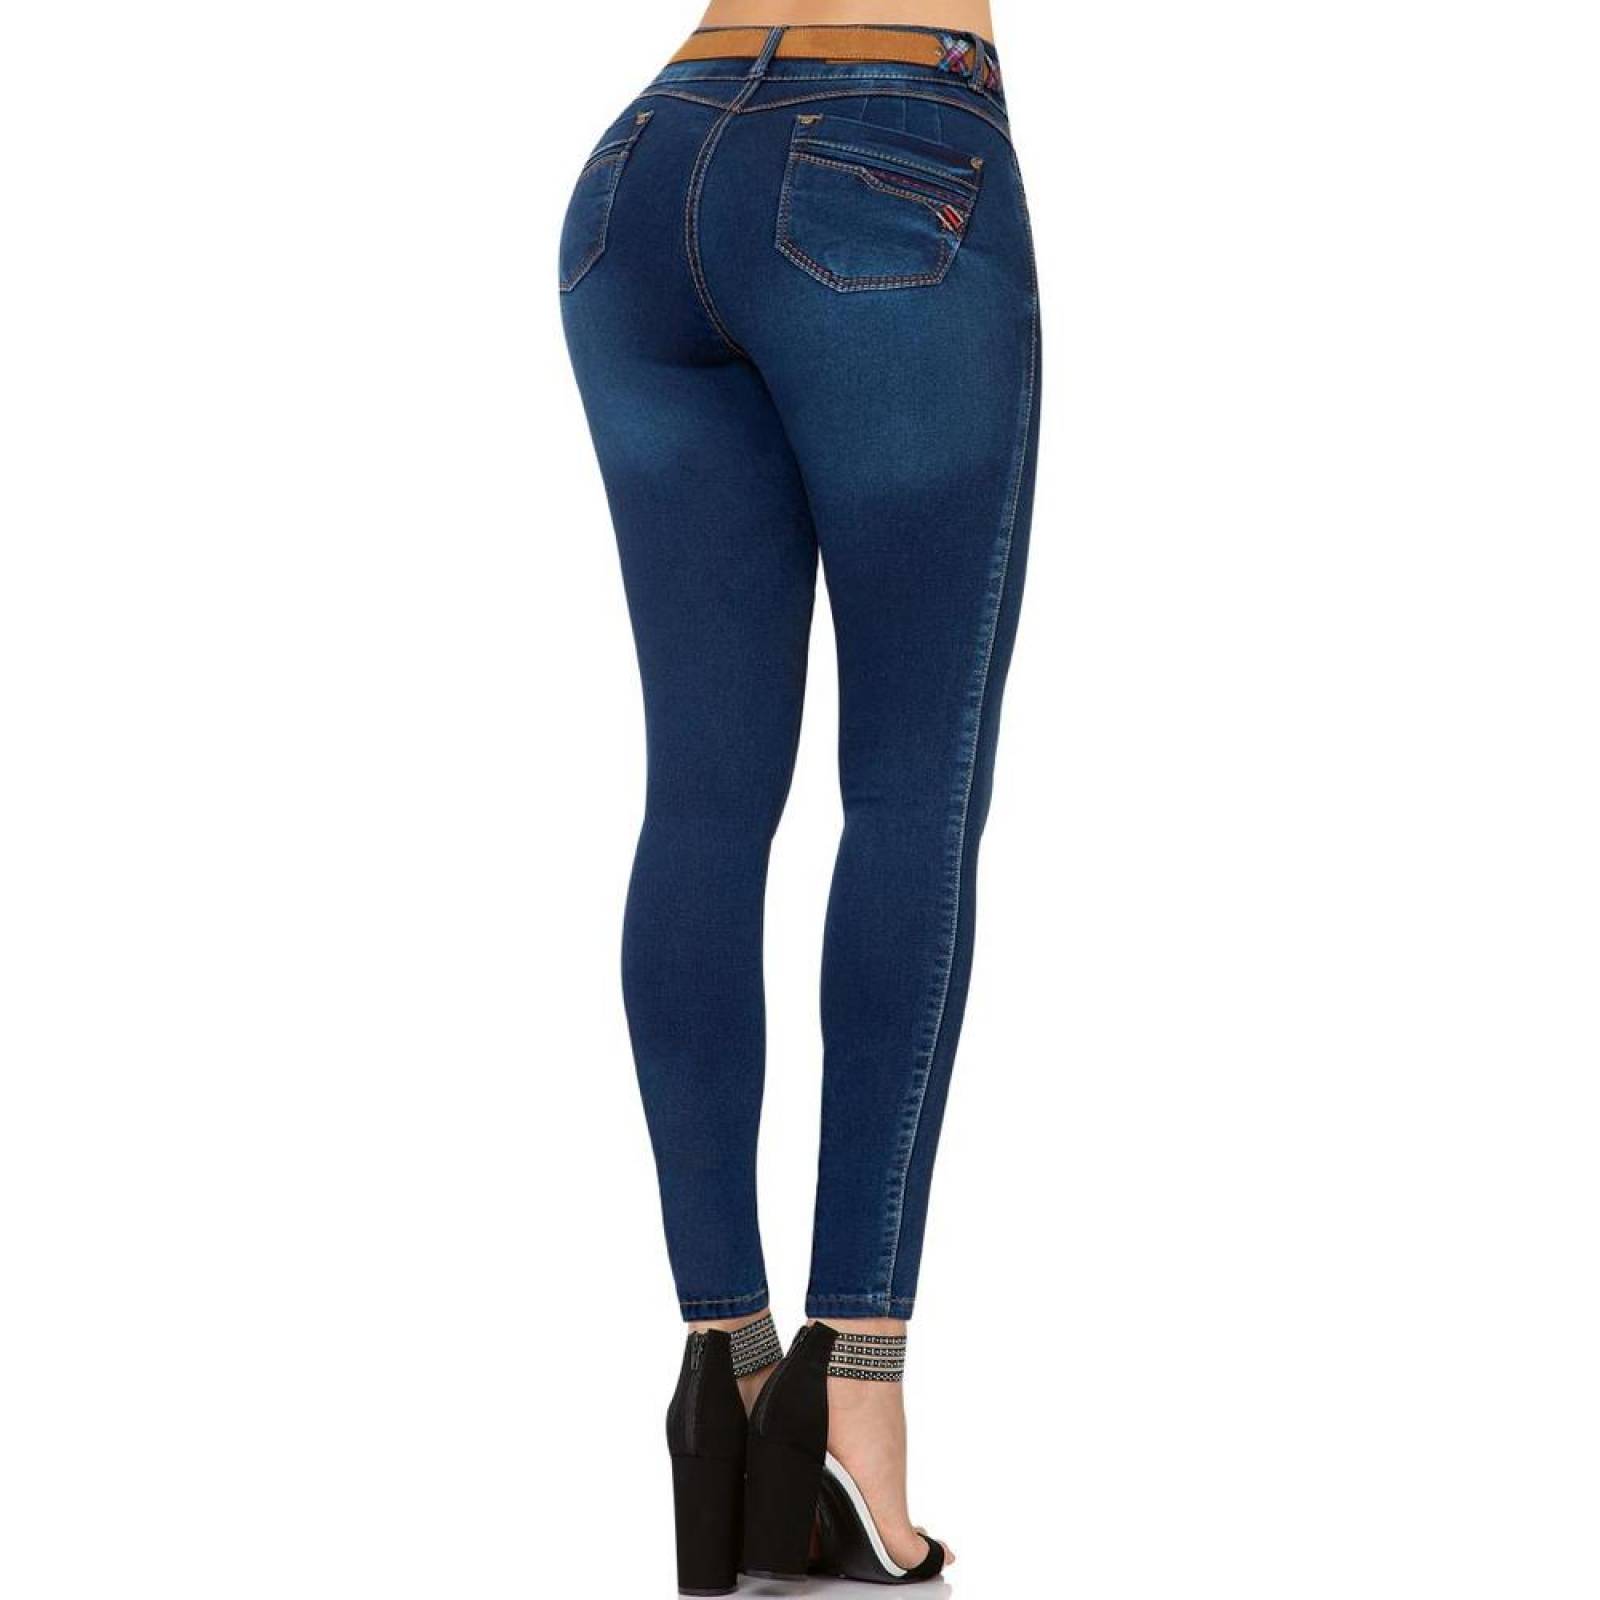 Jeans Moda Mujer Fergino Indigo 52903305 Mezclilla Stretch 